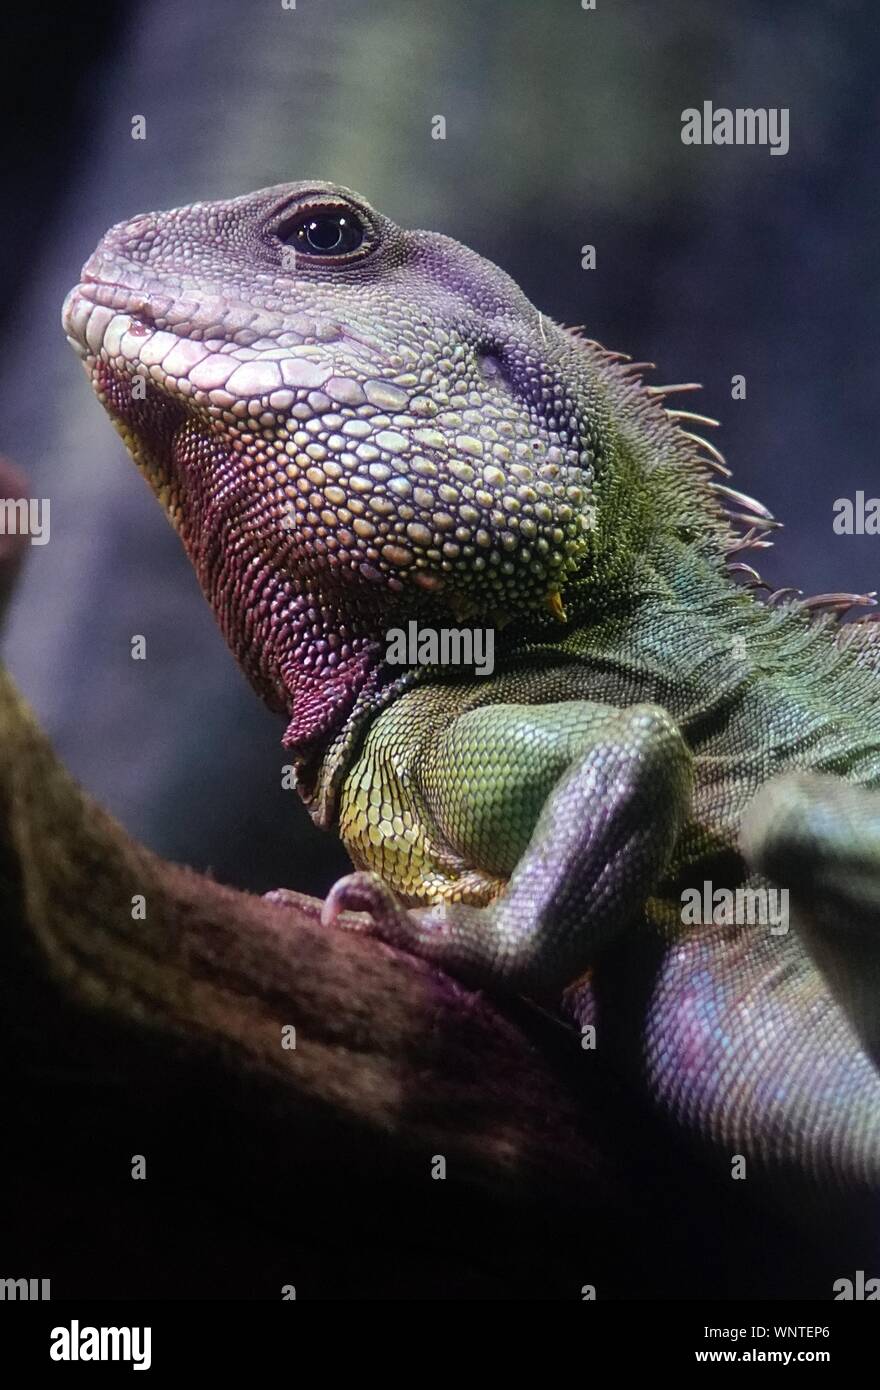 Colourful Iguana lizard close up Stock Photo